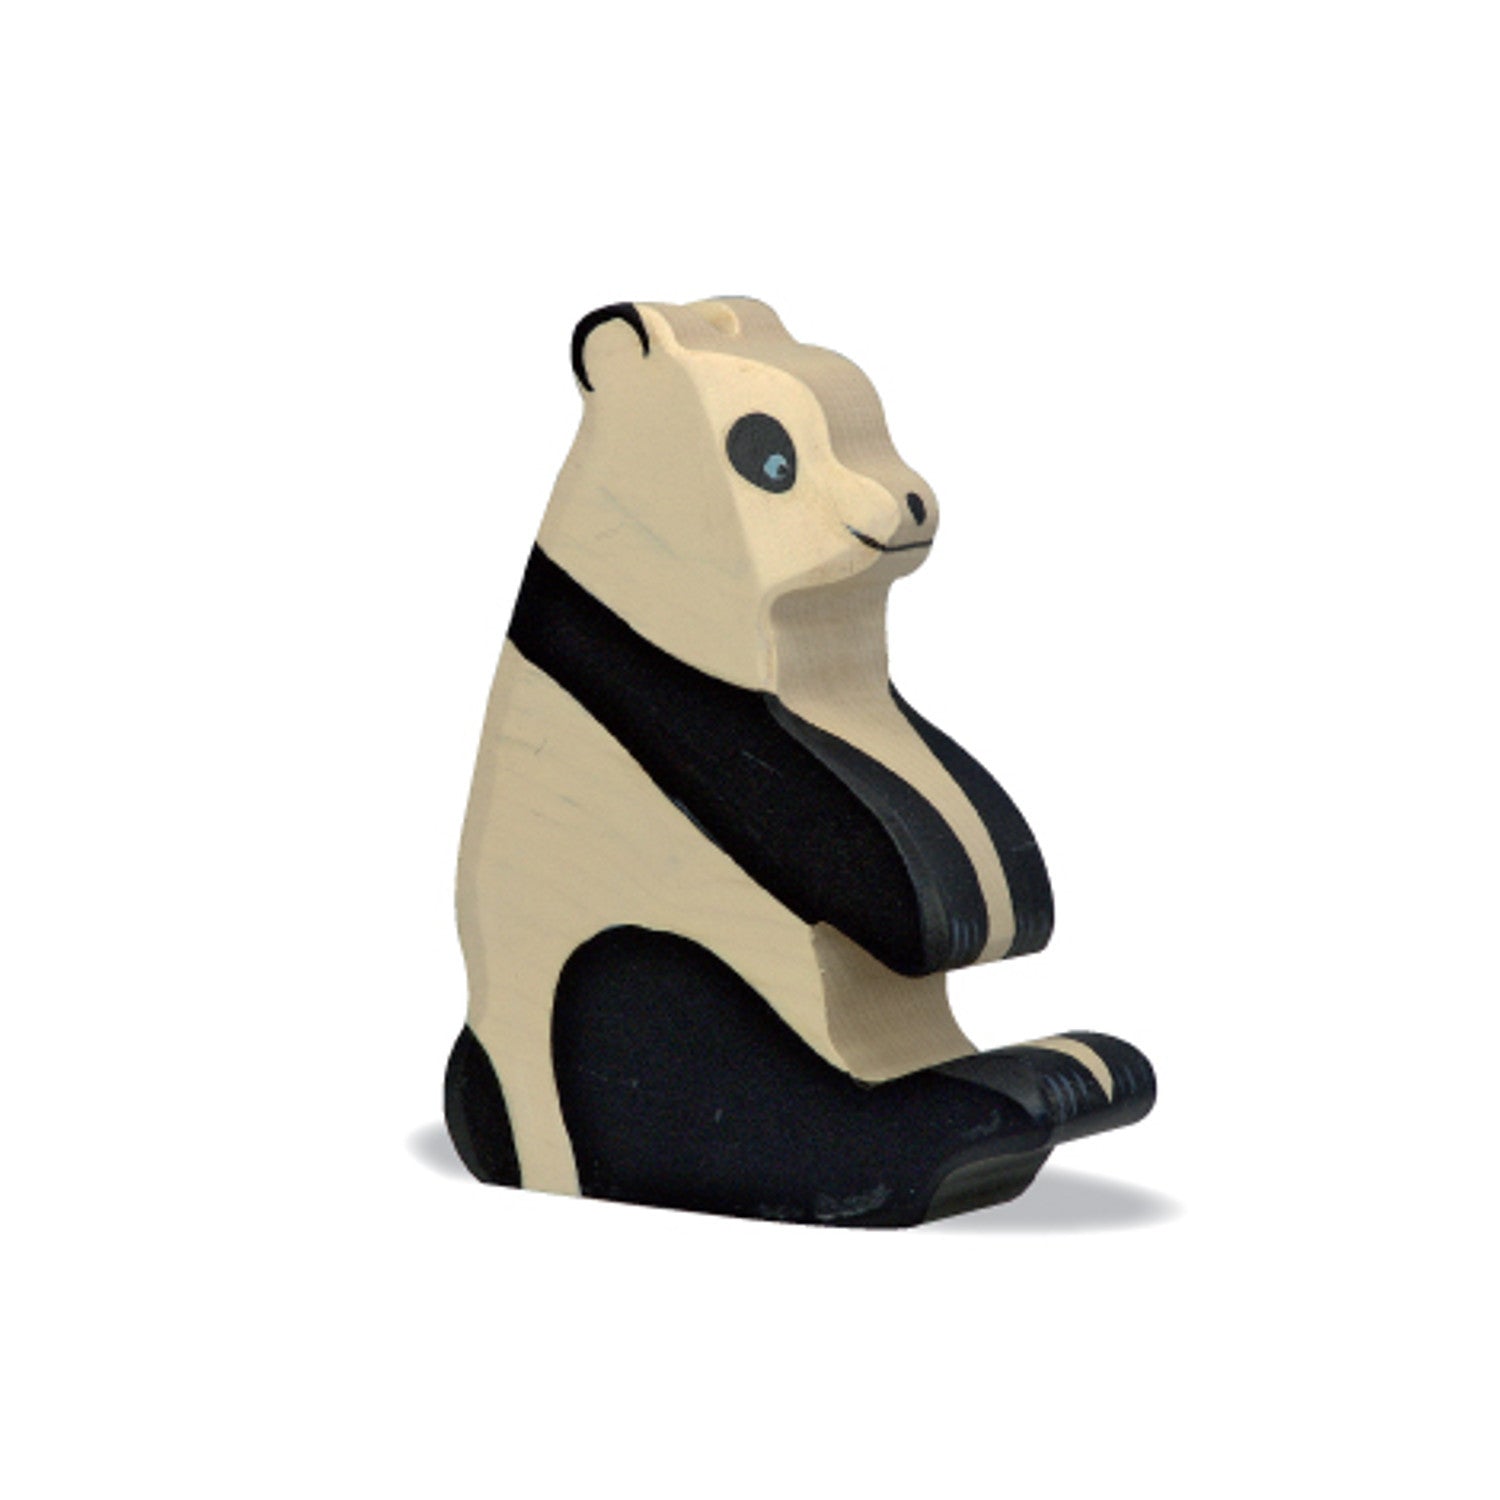 Holztiger wooden hand caved panda sitting figurine imaginative play